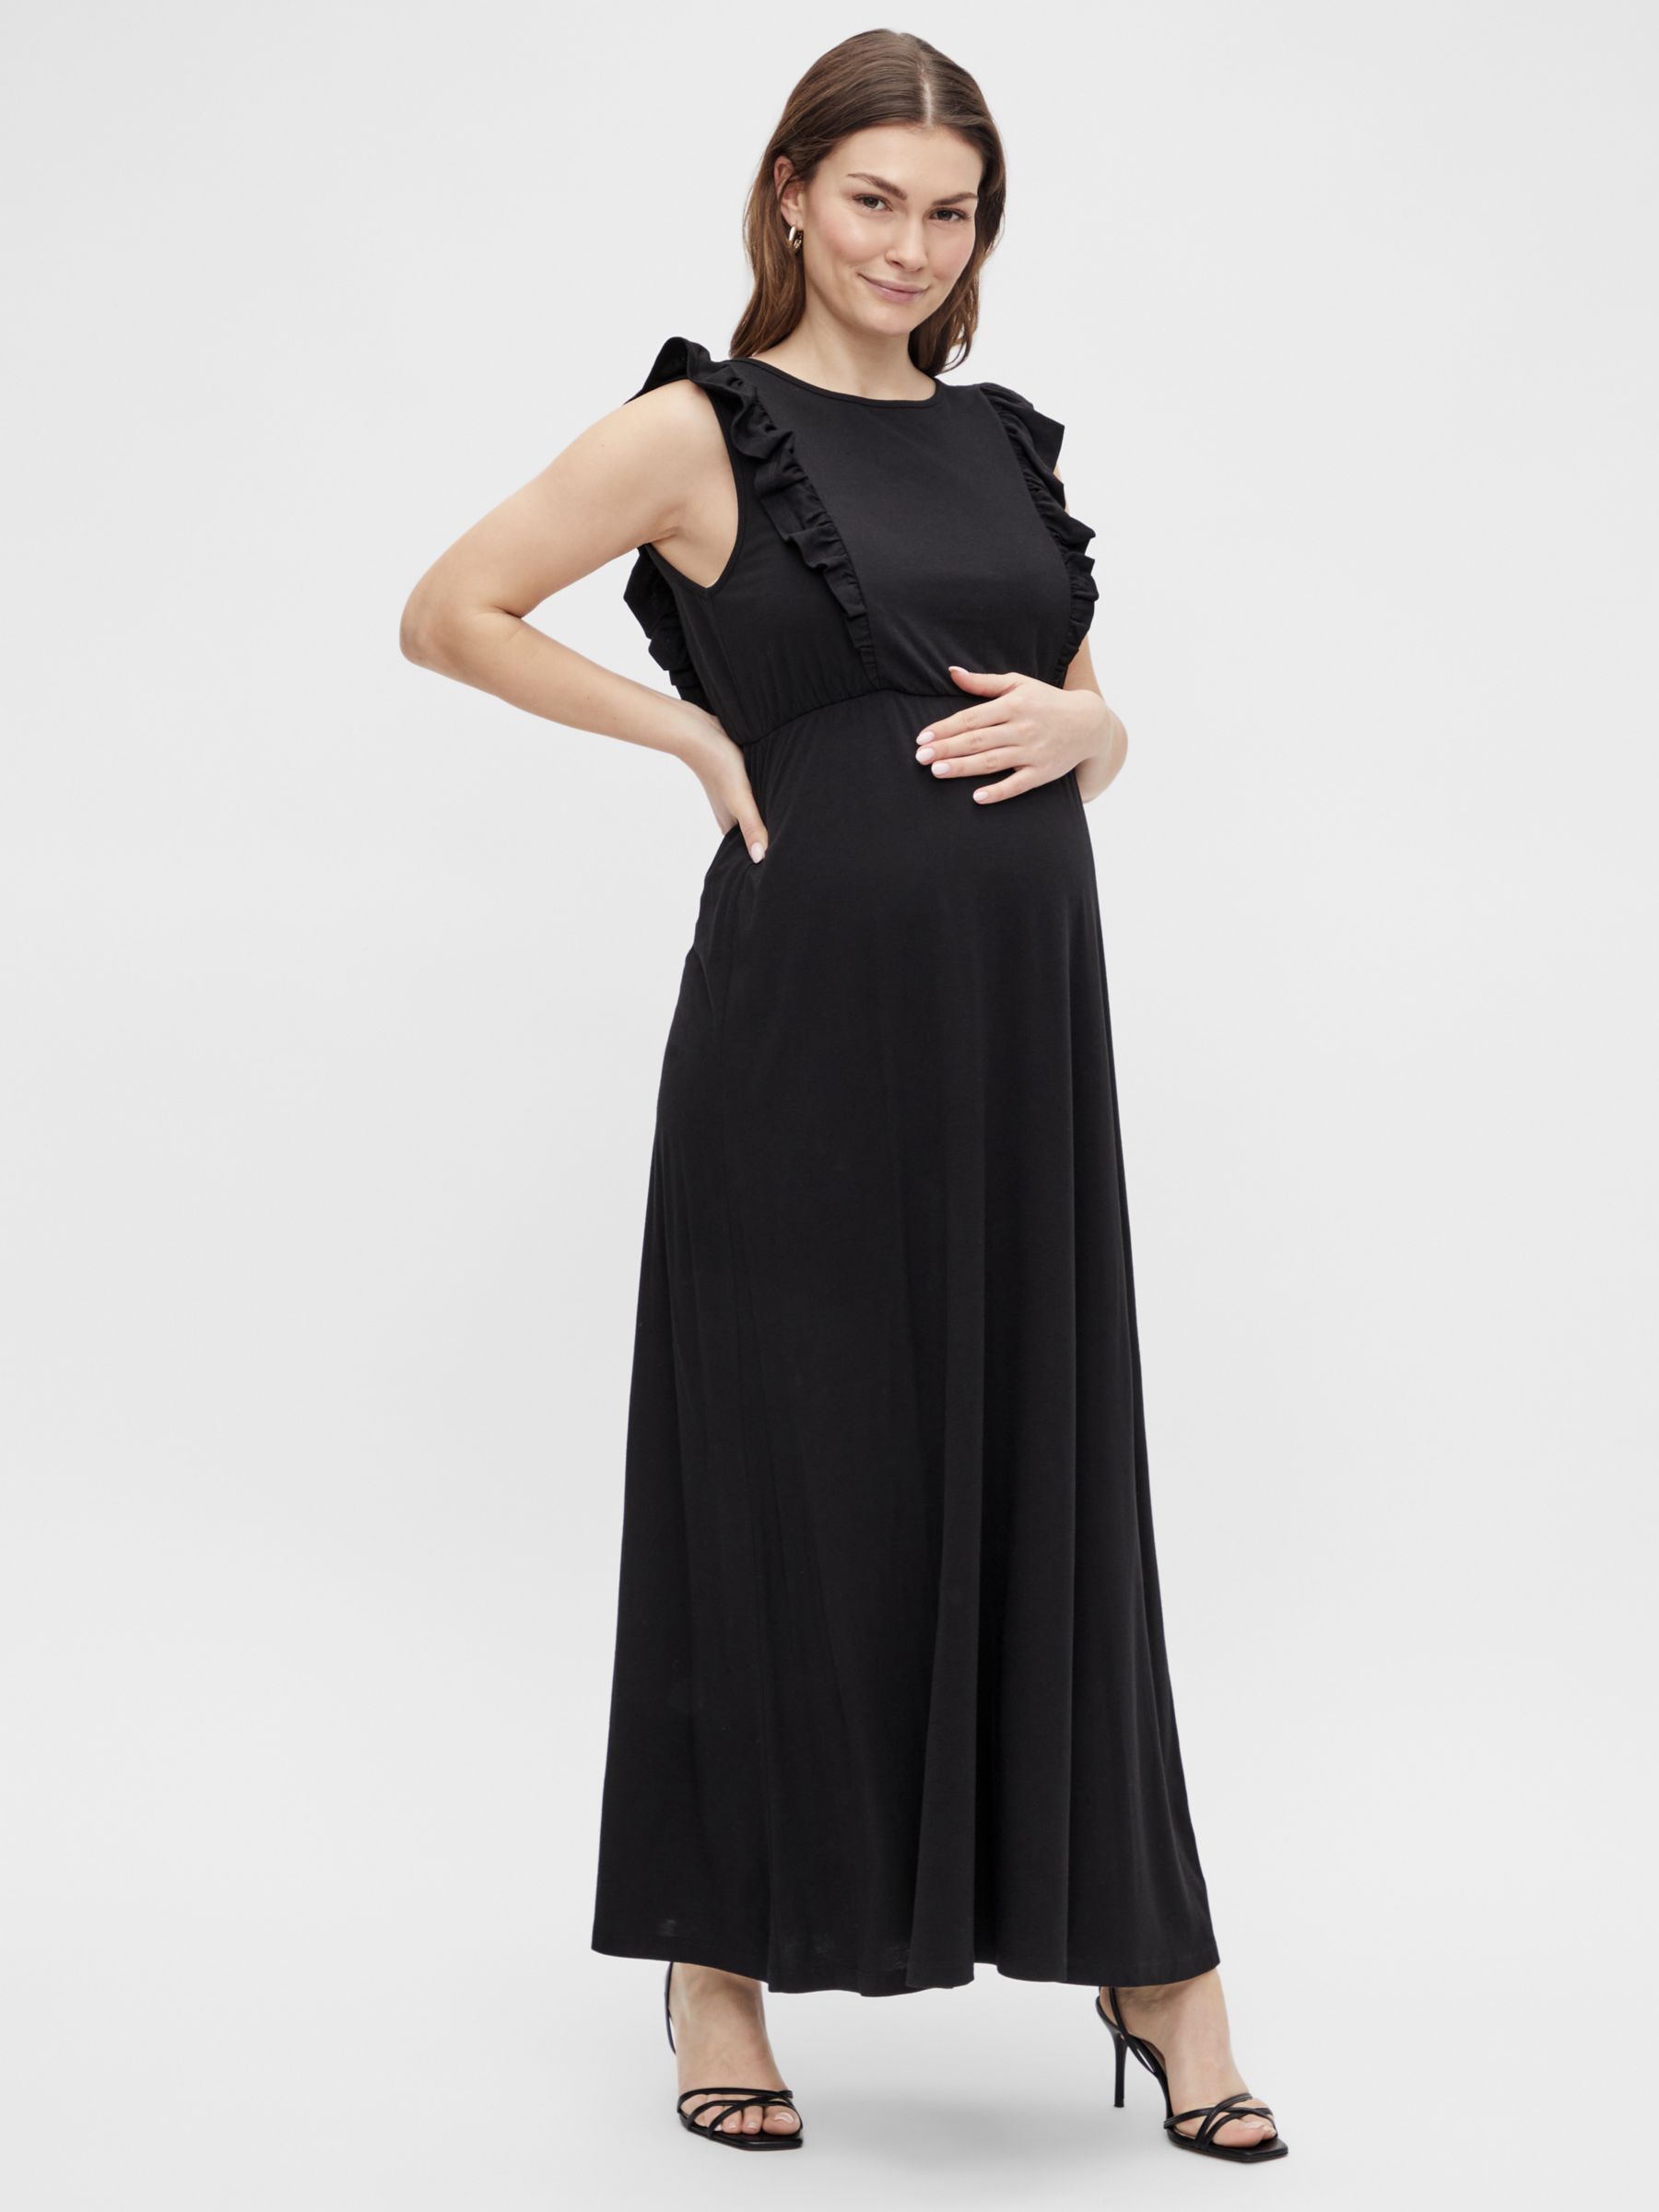 Mamalicious Roberta Mary Ruffle Maxi Maternity & Nursing Dress, Black, S